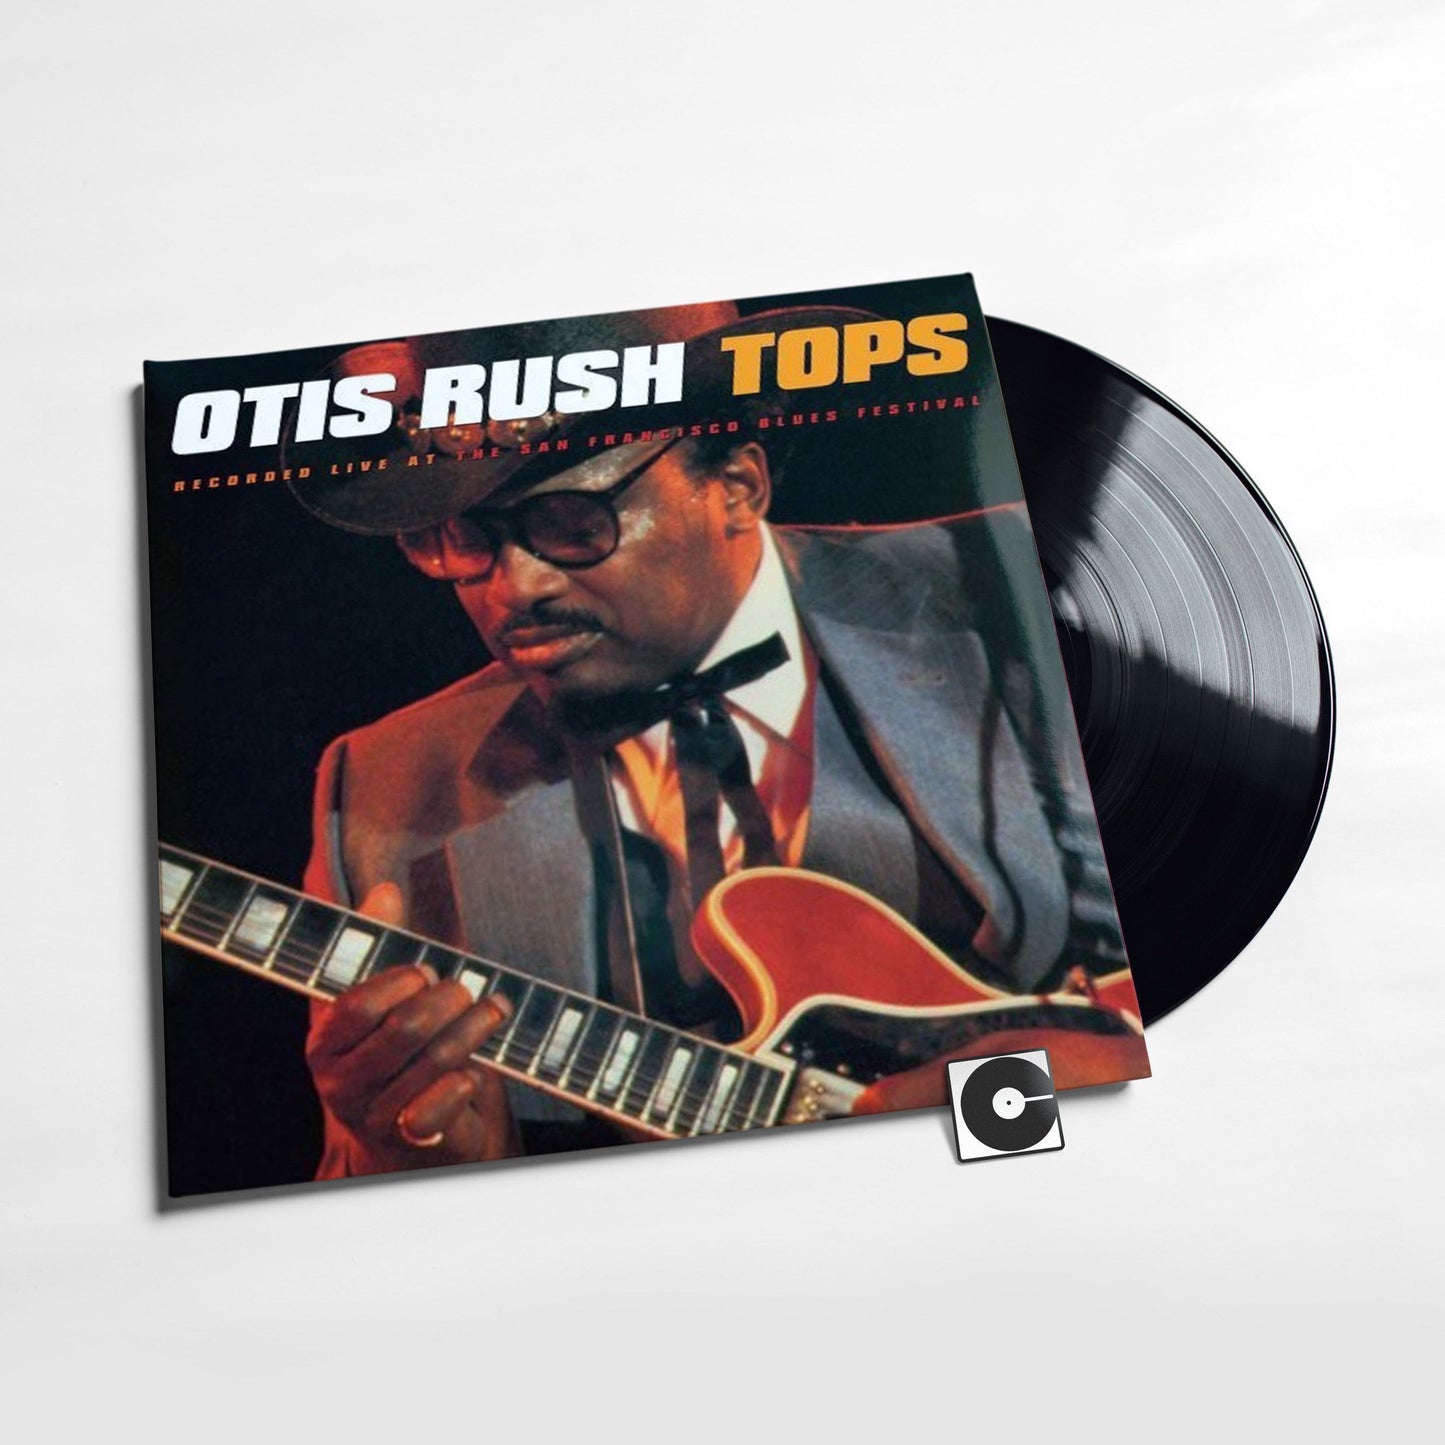 Otis Rush - "Tops"